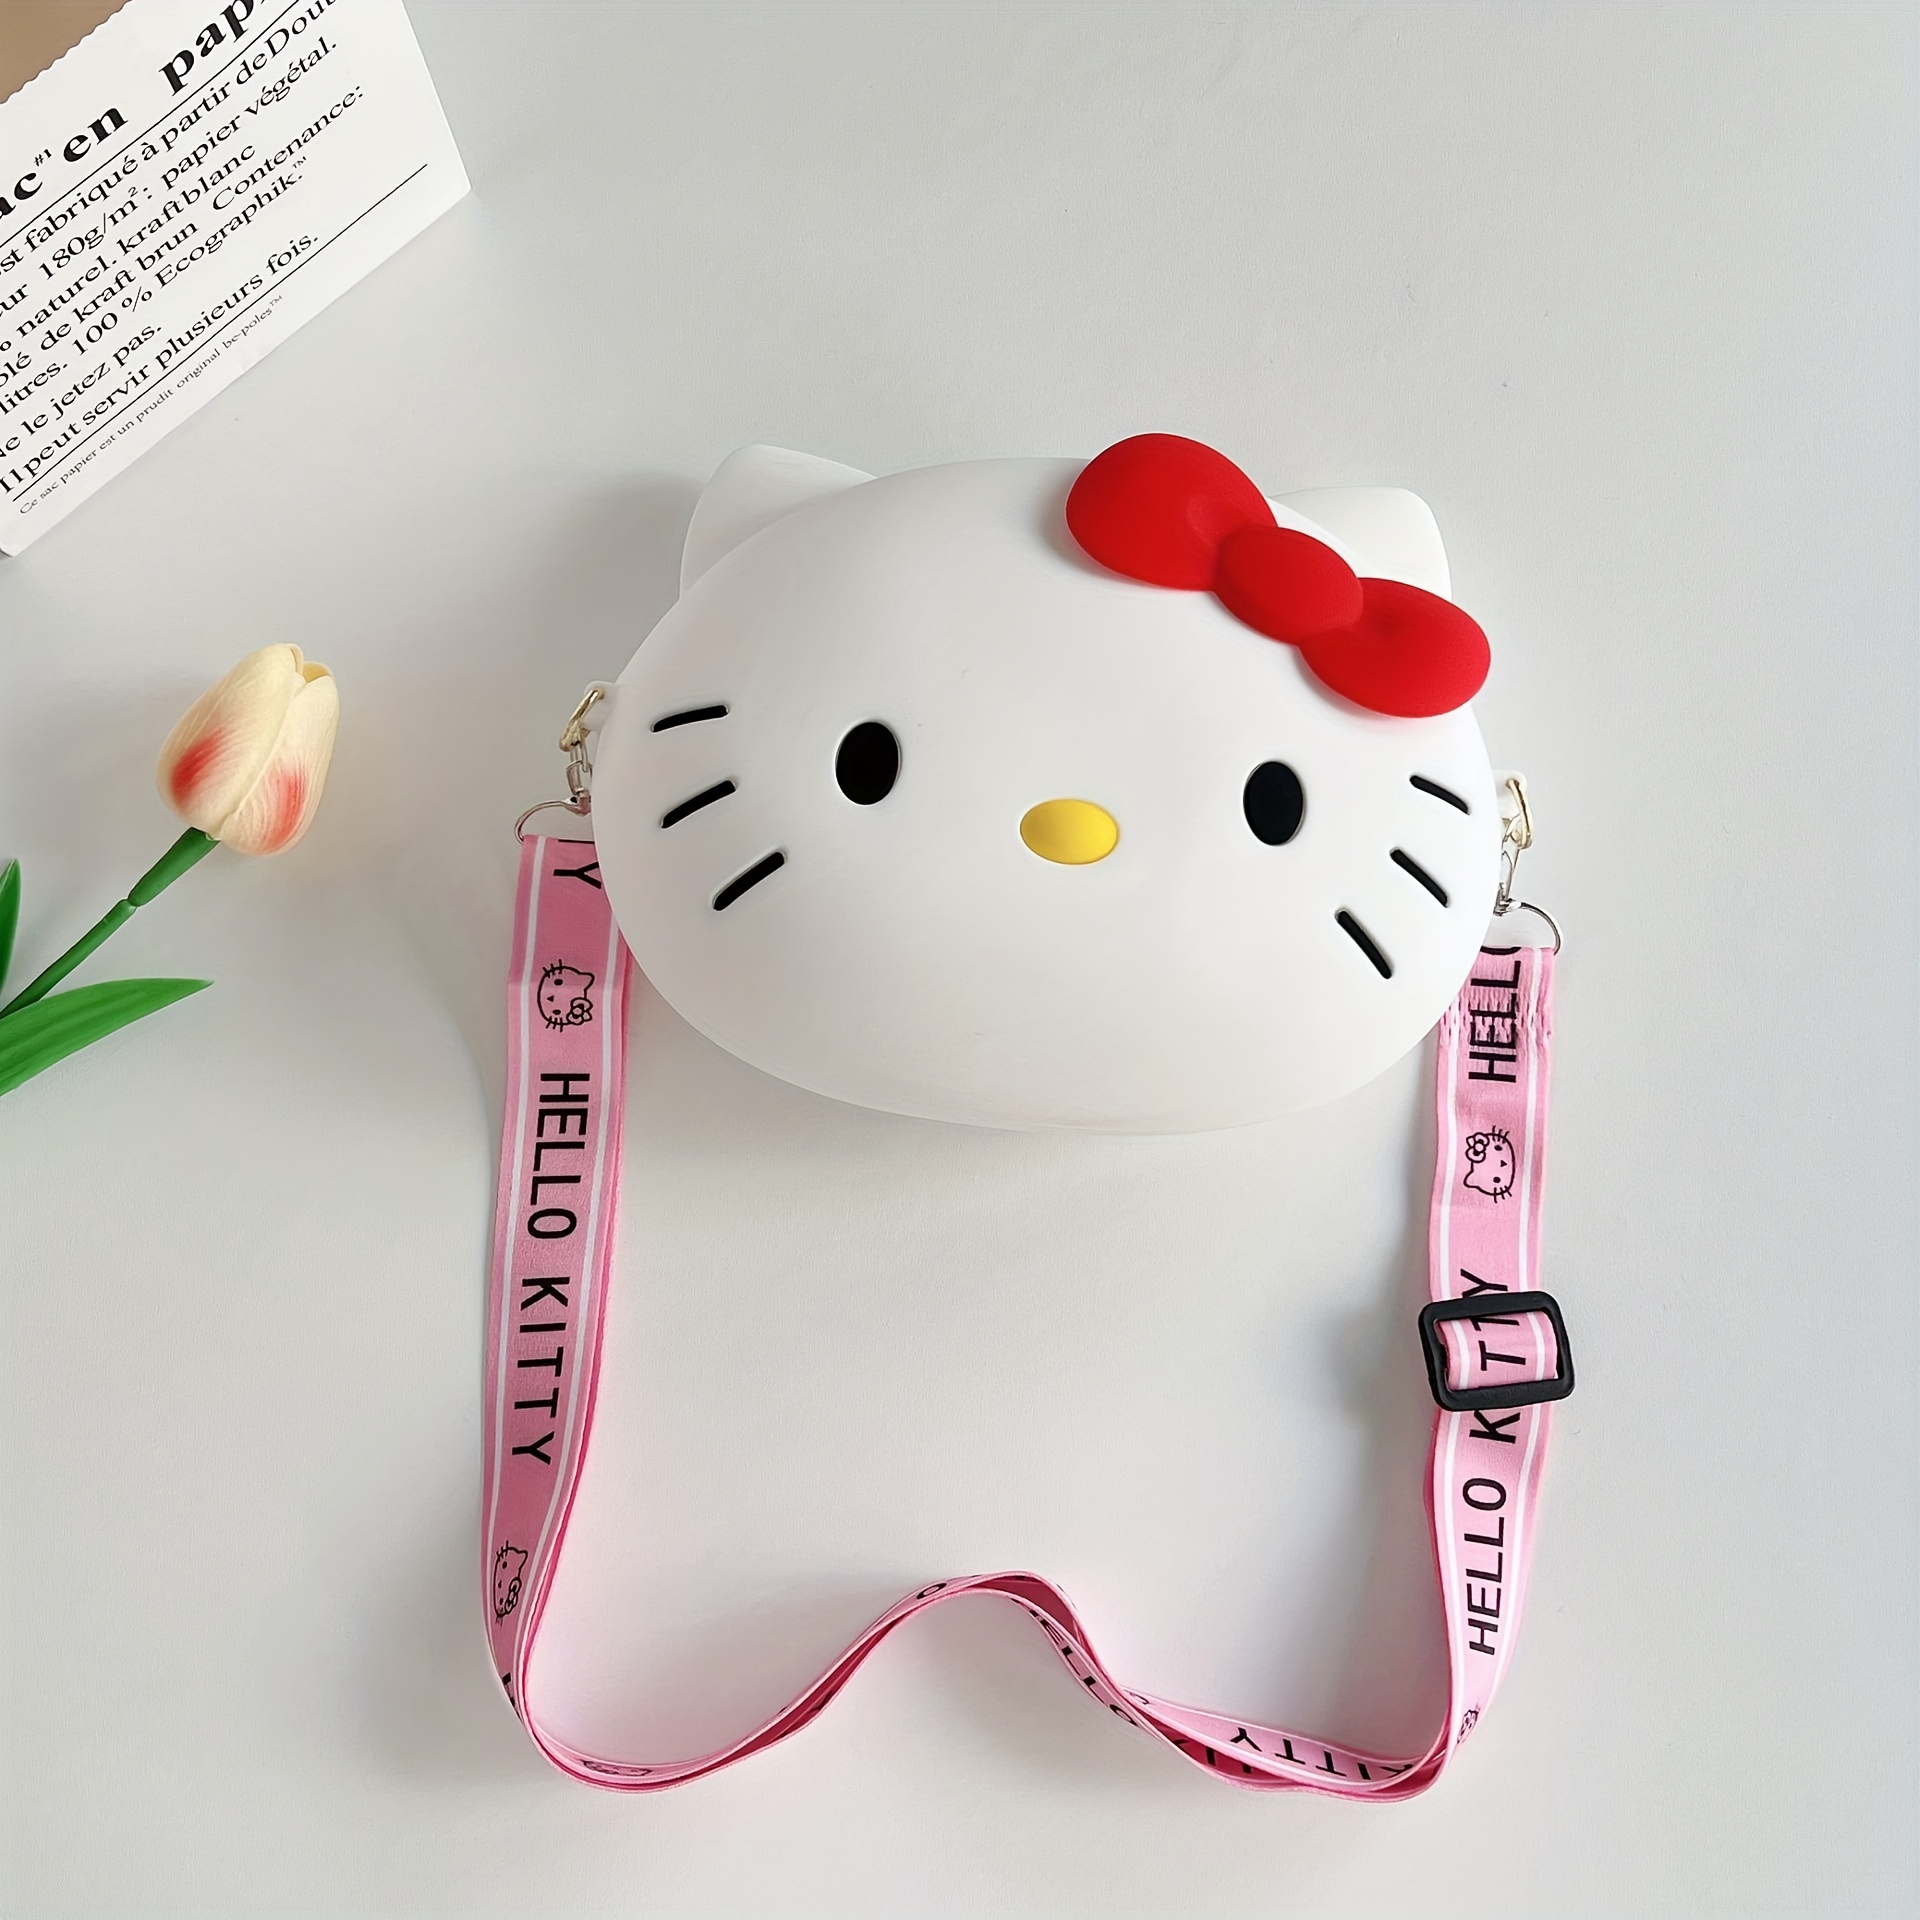 bags for women Hello Kitty Bag Cute Crossbody Handbag Waterproof